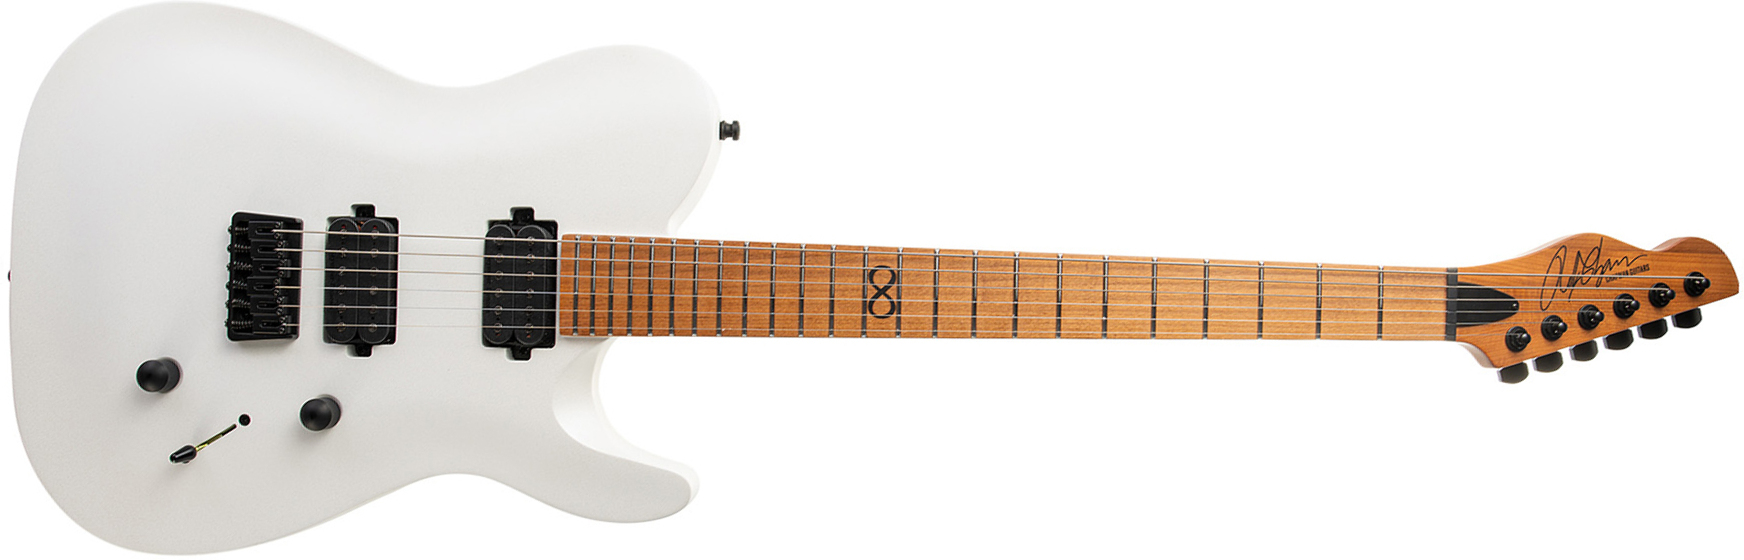 Chapman Guitars Ml3 Modern Pro Hh Seymour Duncan Ht Mn - Hot White - Guitarra eléctrica con forma de tel - Main picture